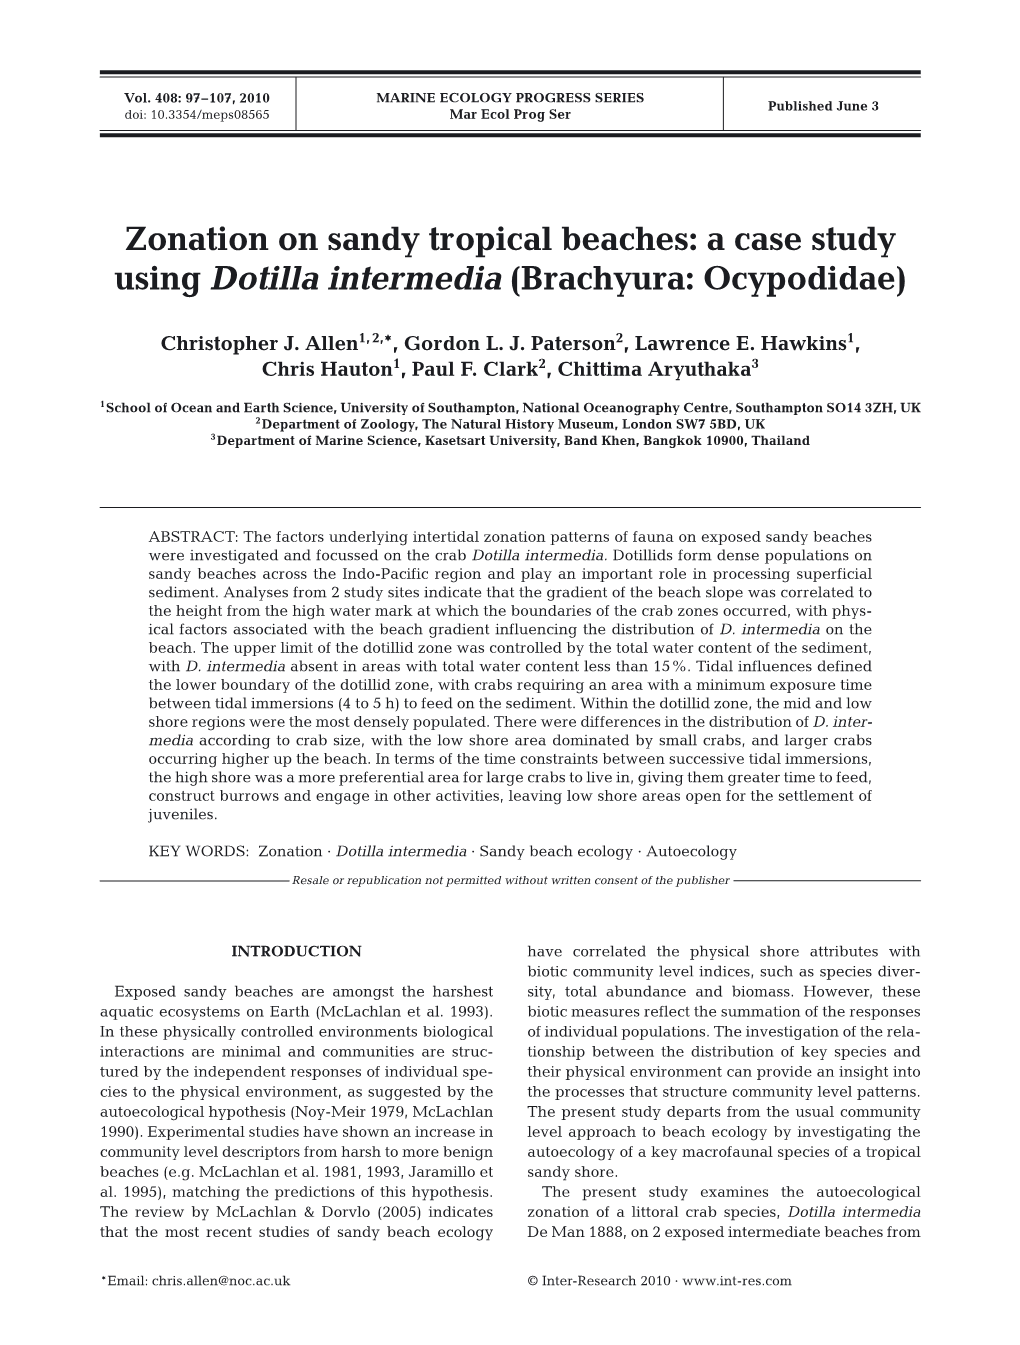 Zonation on Sandy Tropical Beaches: a Case Study Using Dotilla Intermedia (Brachyura: Ocypodidae)